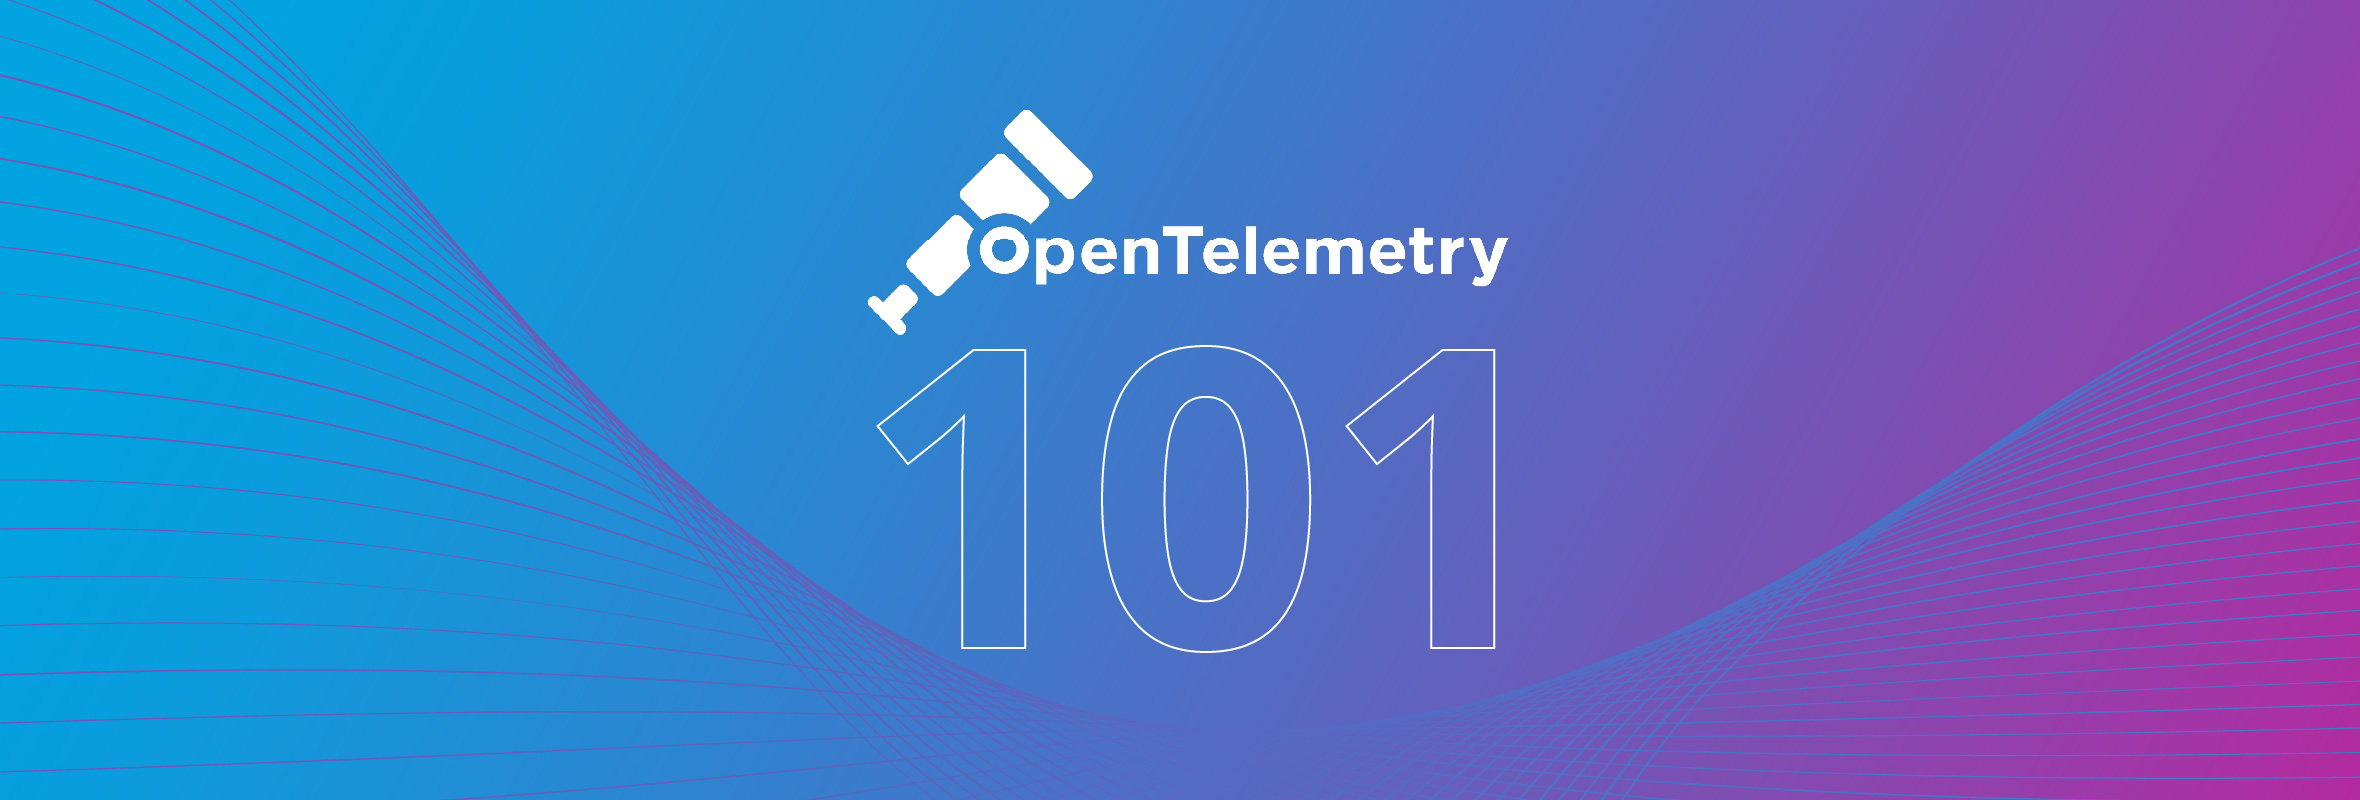 Open Telemetry 101 – A Primer